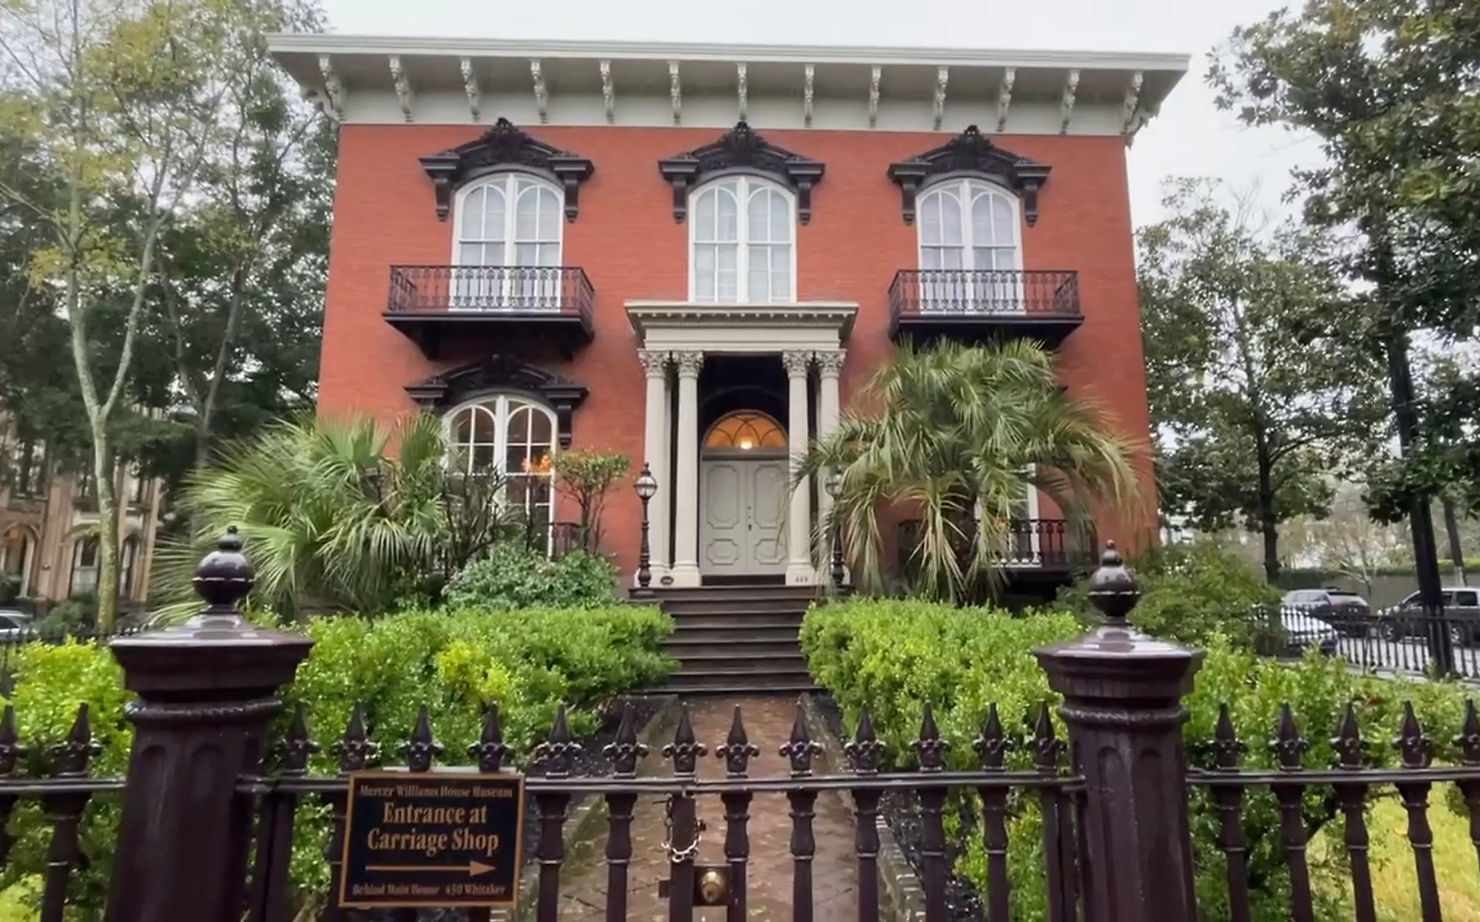 Mercer Williams House Museum, Savannah,Georgia, 